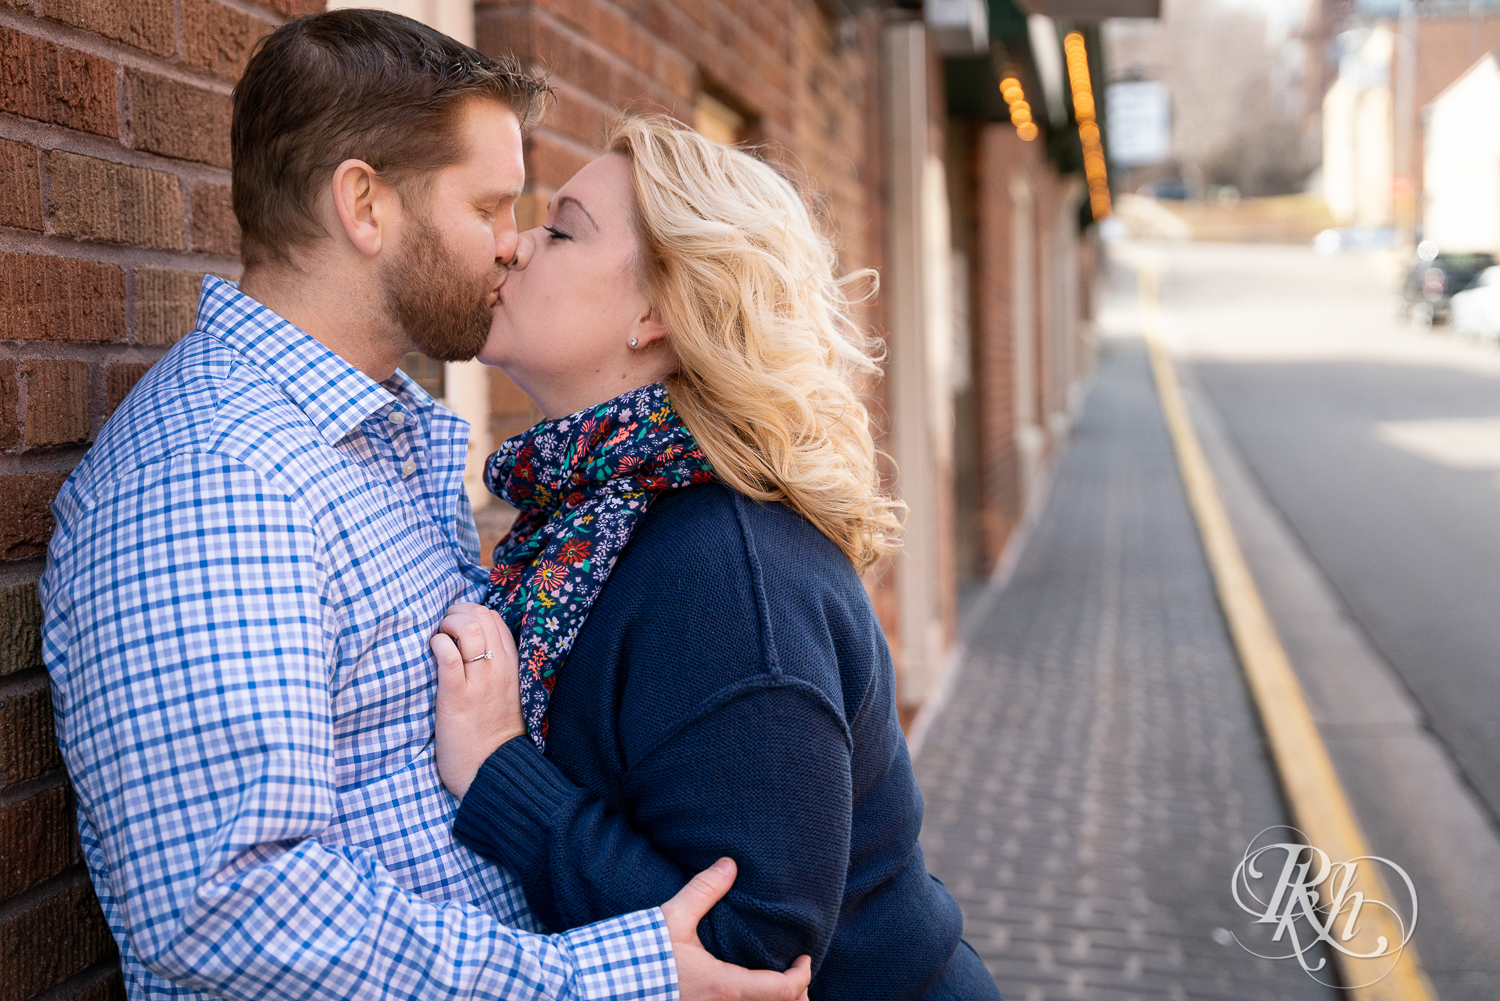 Blond woman and bearded man kiss against brick wall in Stillwater, Minnesota.